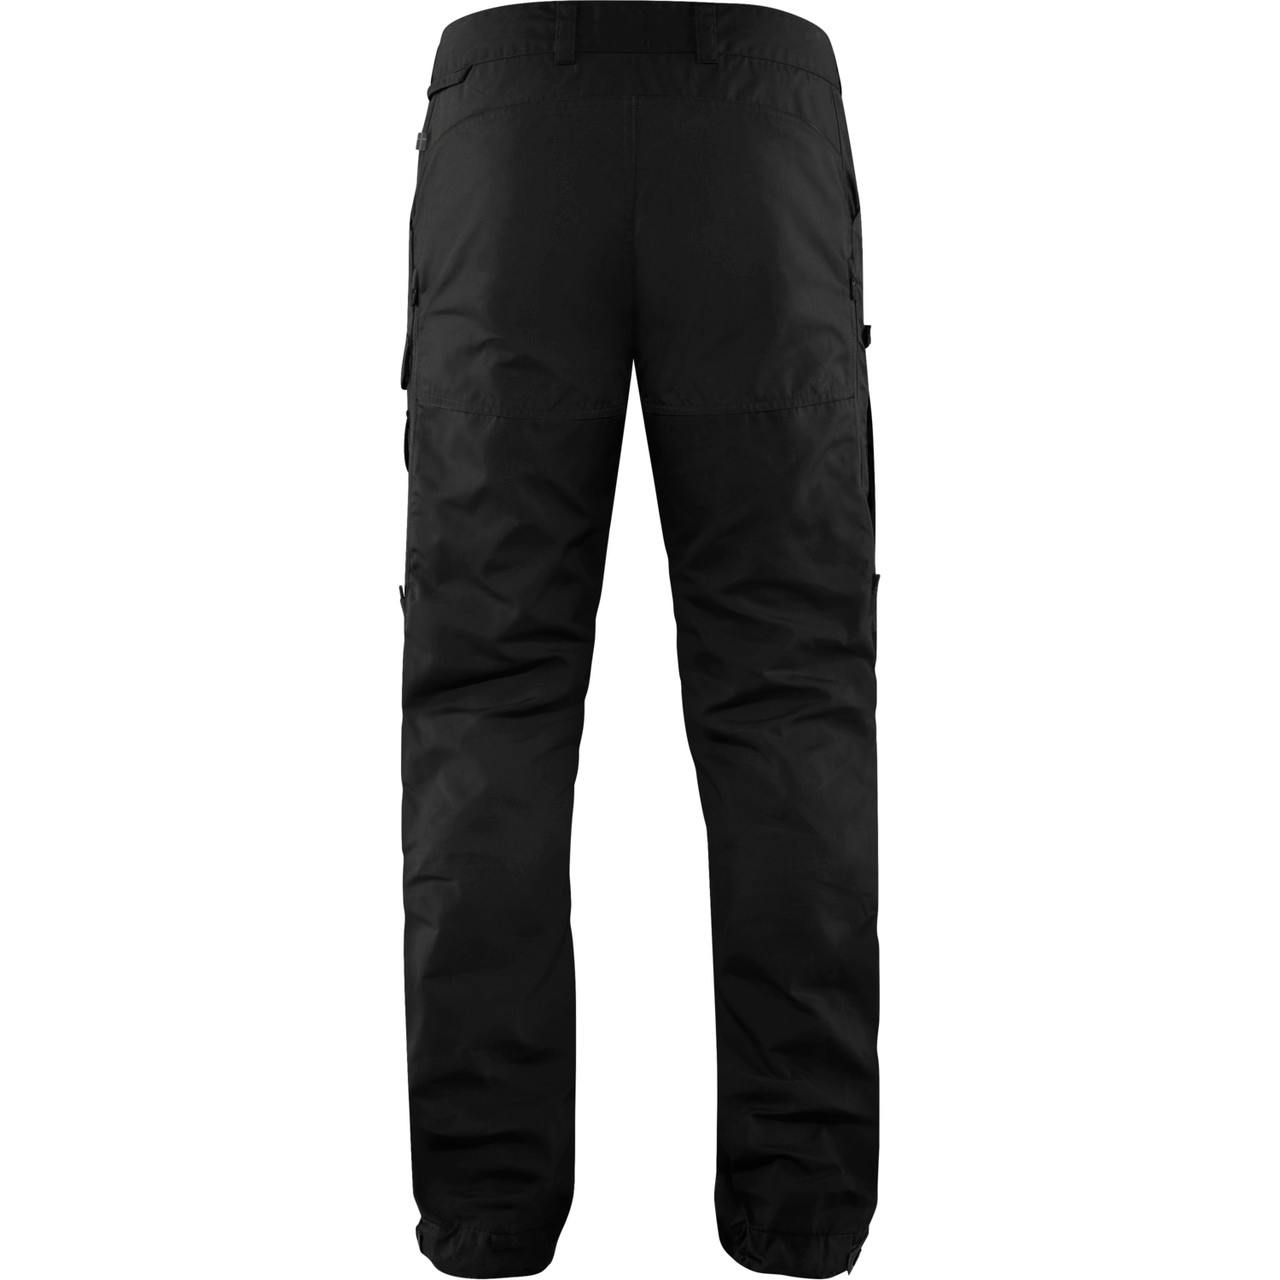 Pantalon Vidda Pro Ventilated Noir